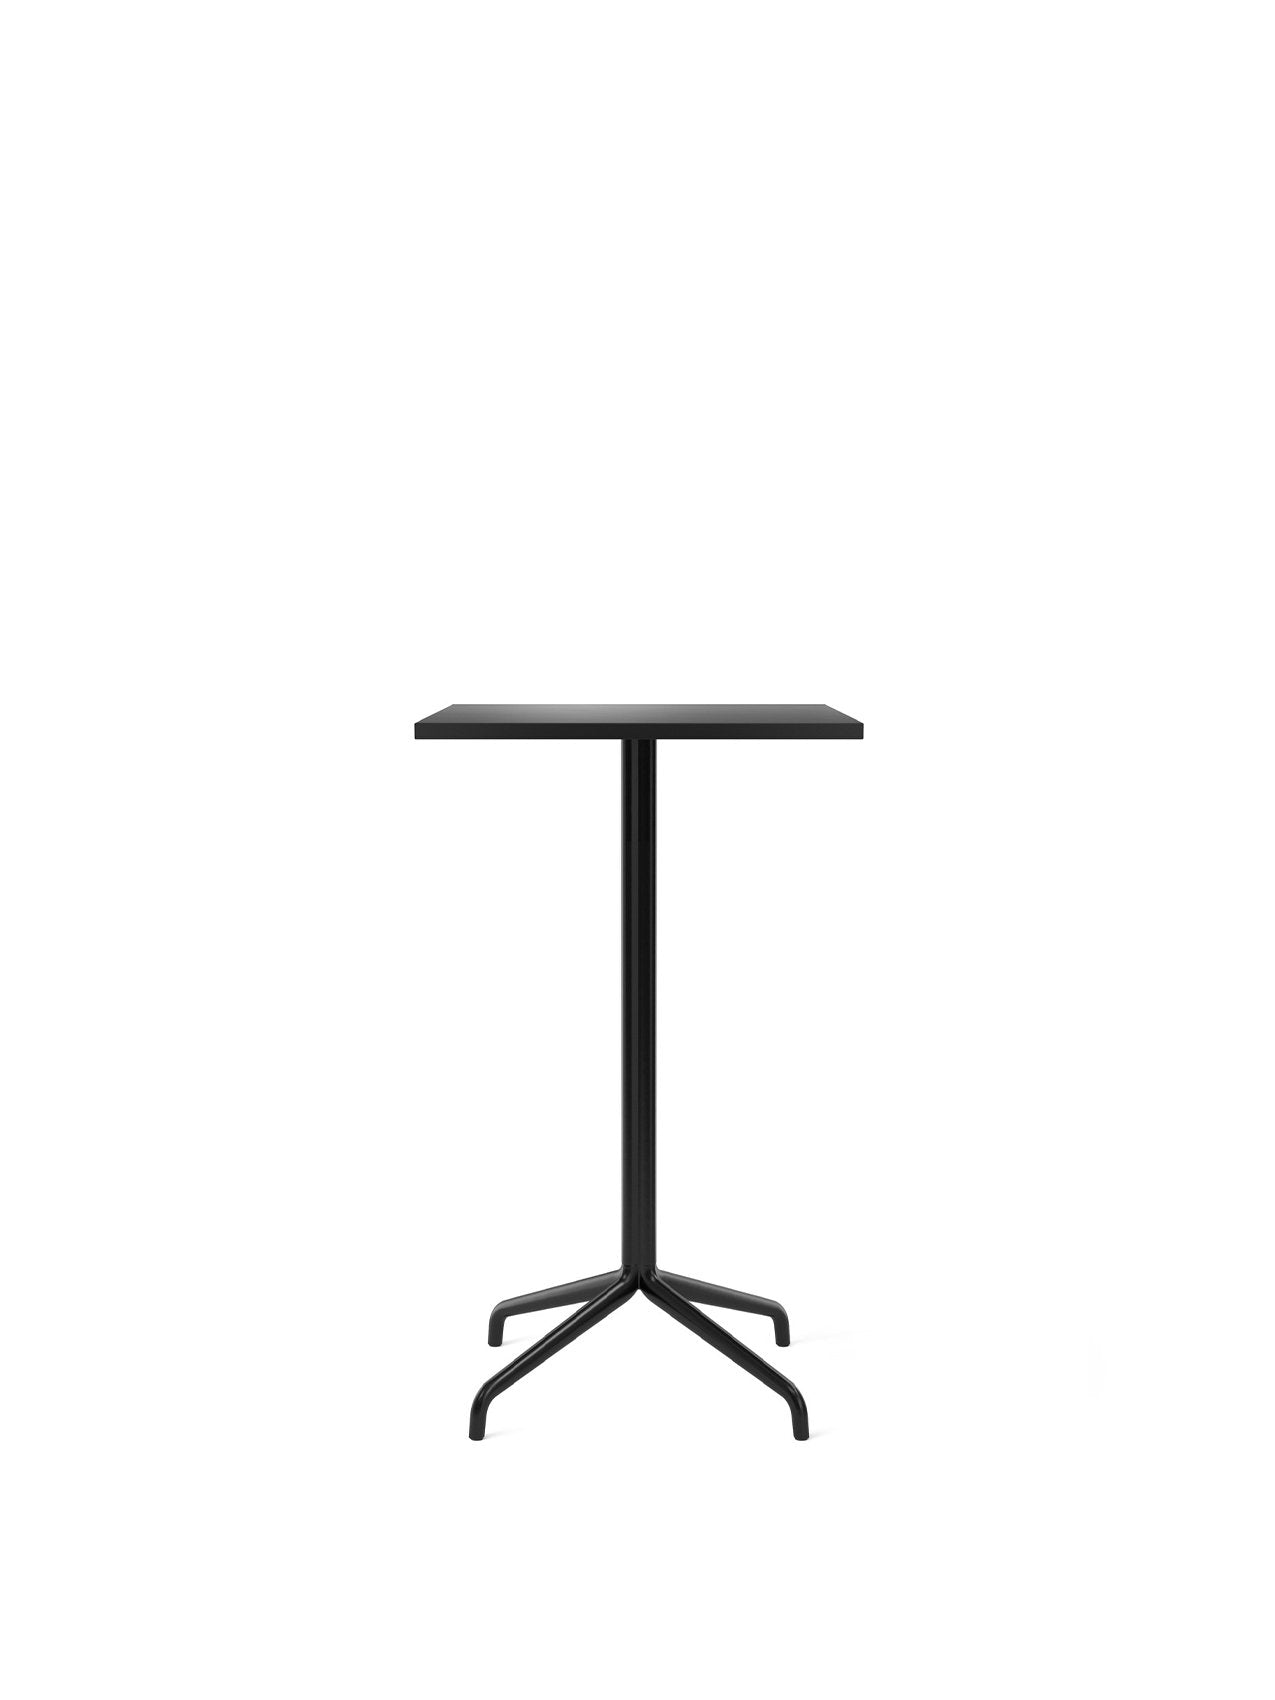 Granite Dining Table Designs 2023 - Decorpot Home Interiors